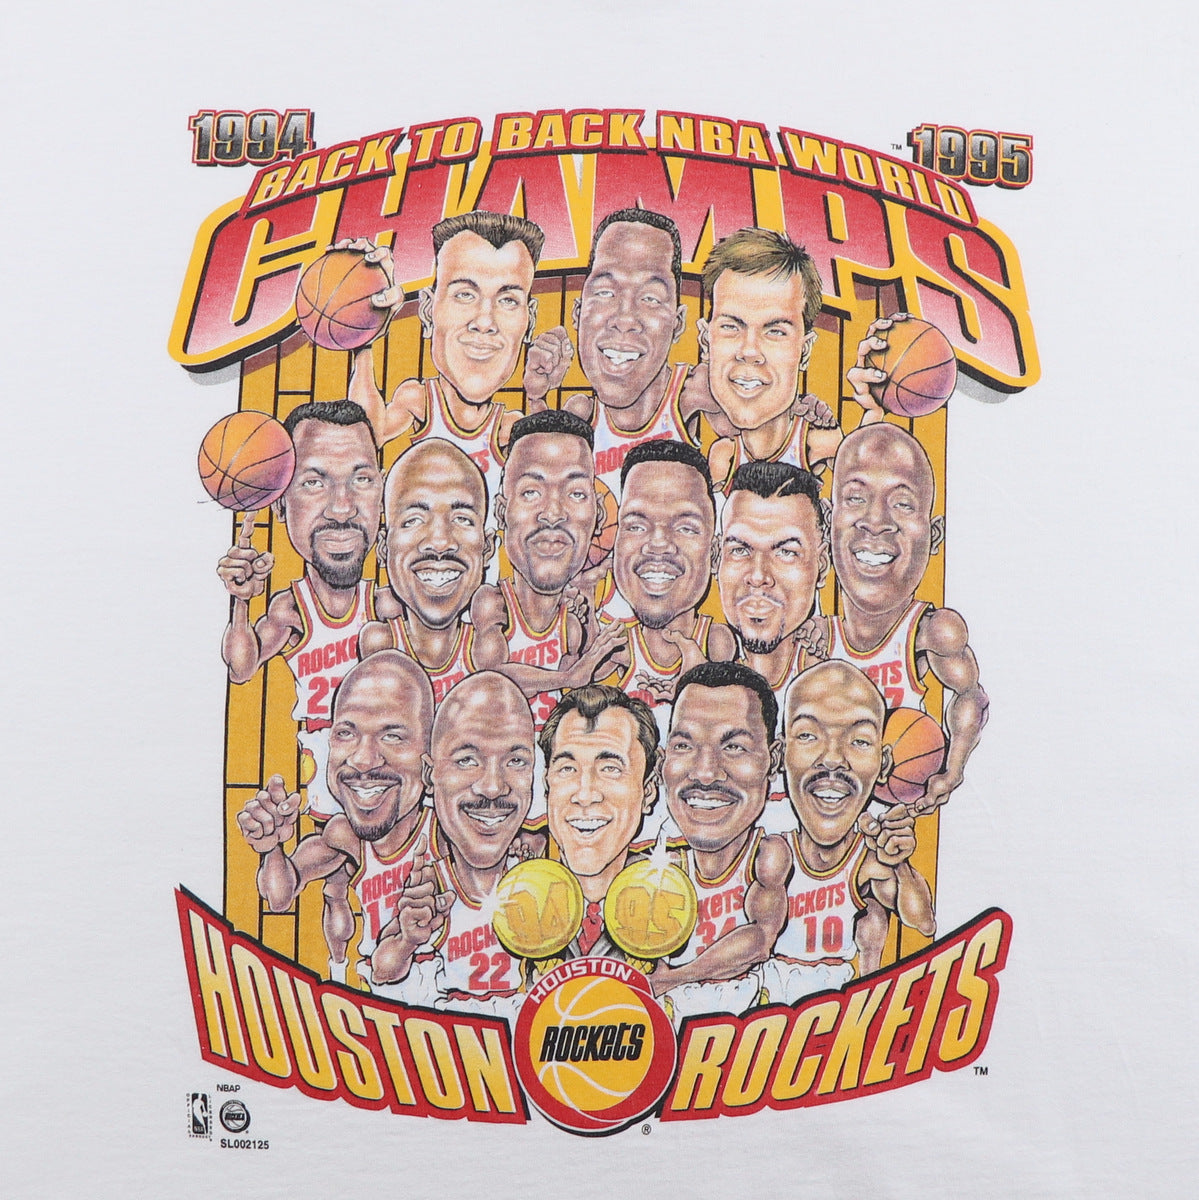 Houston Rockets NBA World 1995 Champions Back To Back Vintage